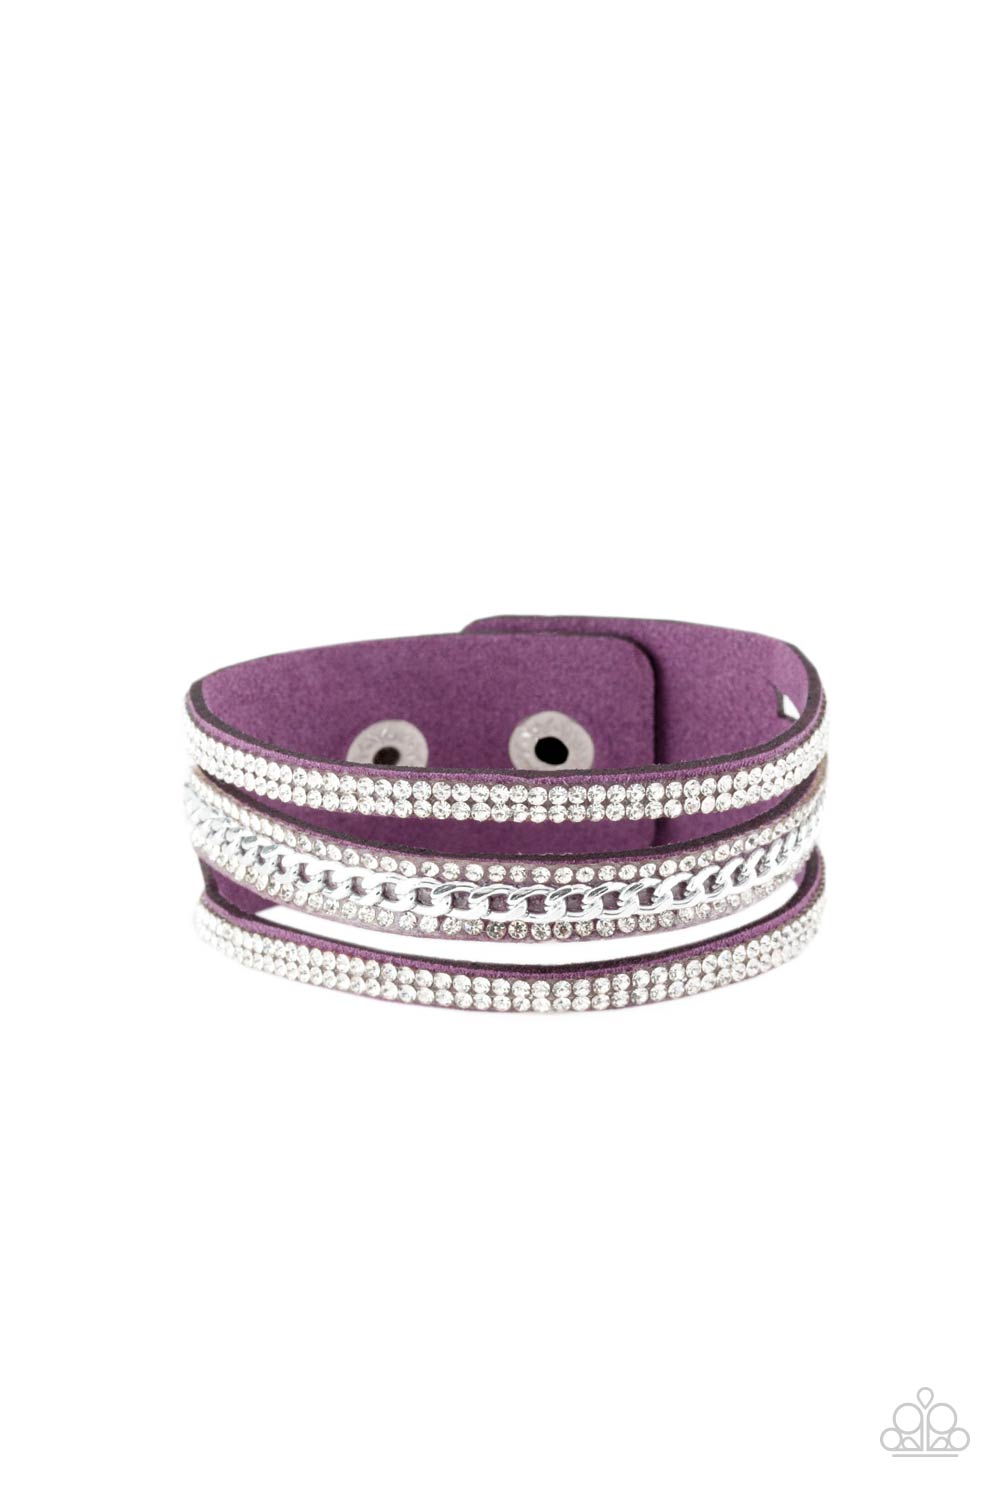 Rollin' In Rhinestones Purple Urban Wrap Snap Bracelet - Paparazzi Accessories- lightbox - CarasShop.com - $5 Jewelry by Cara Jewels